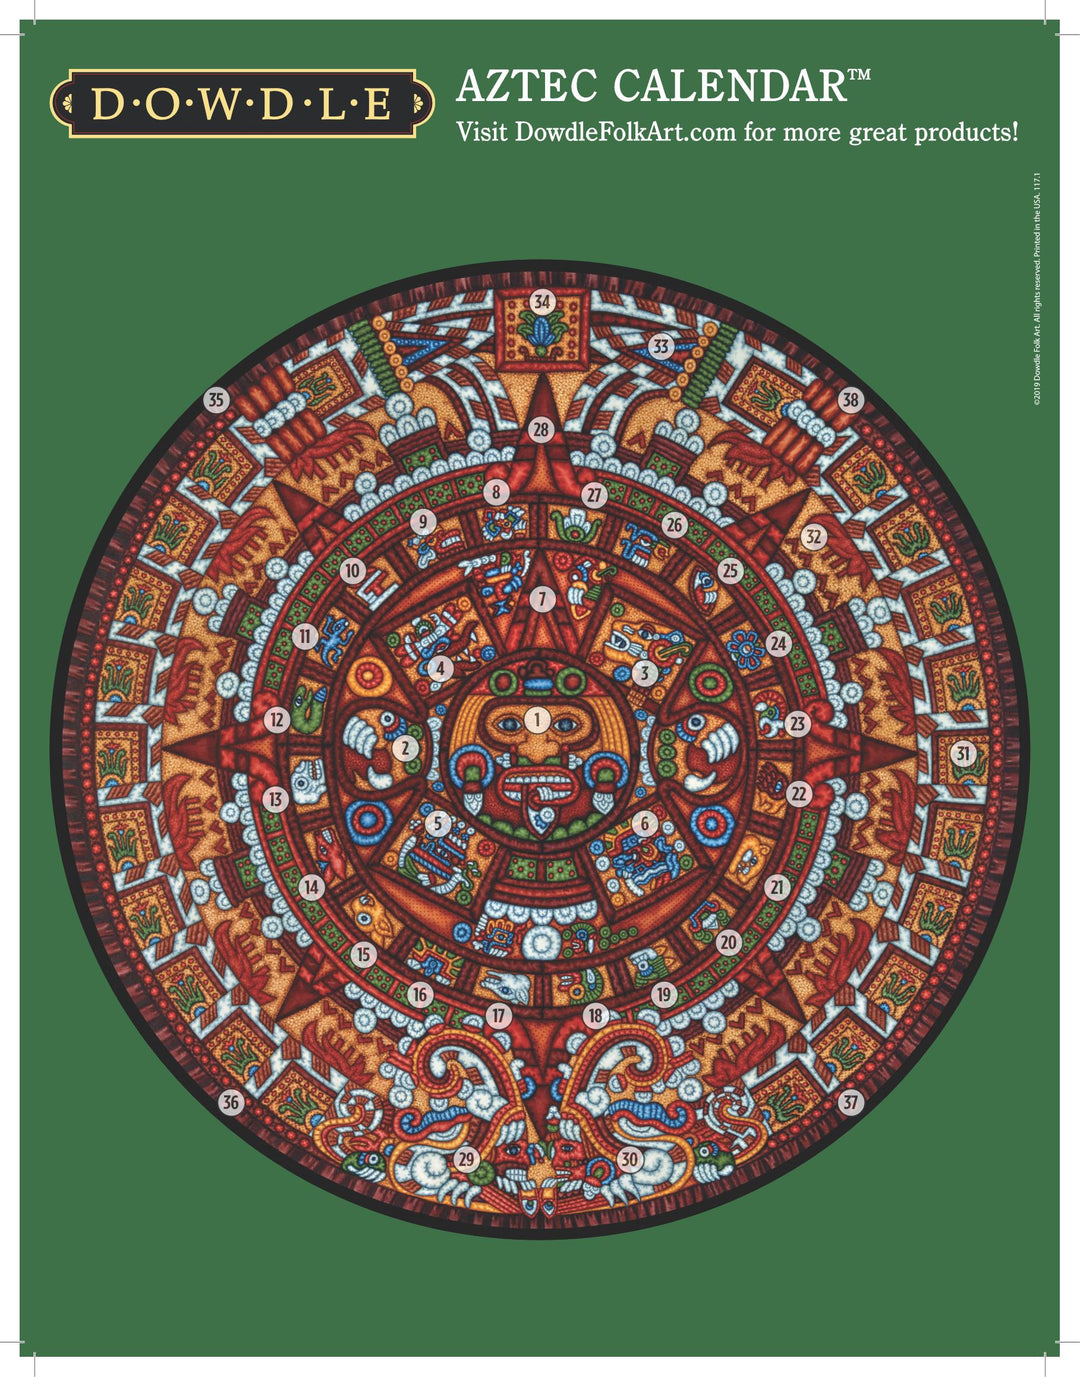 Aztec Calendar - 500 Piece